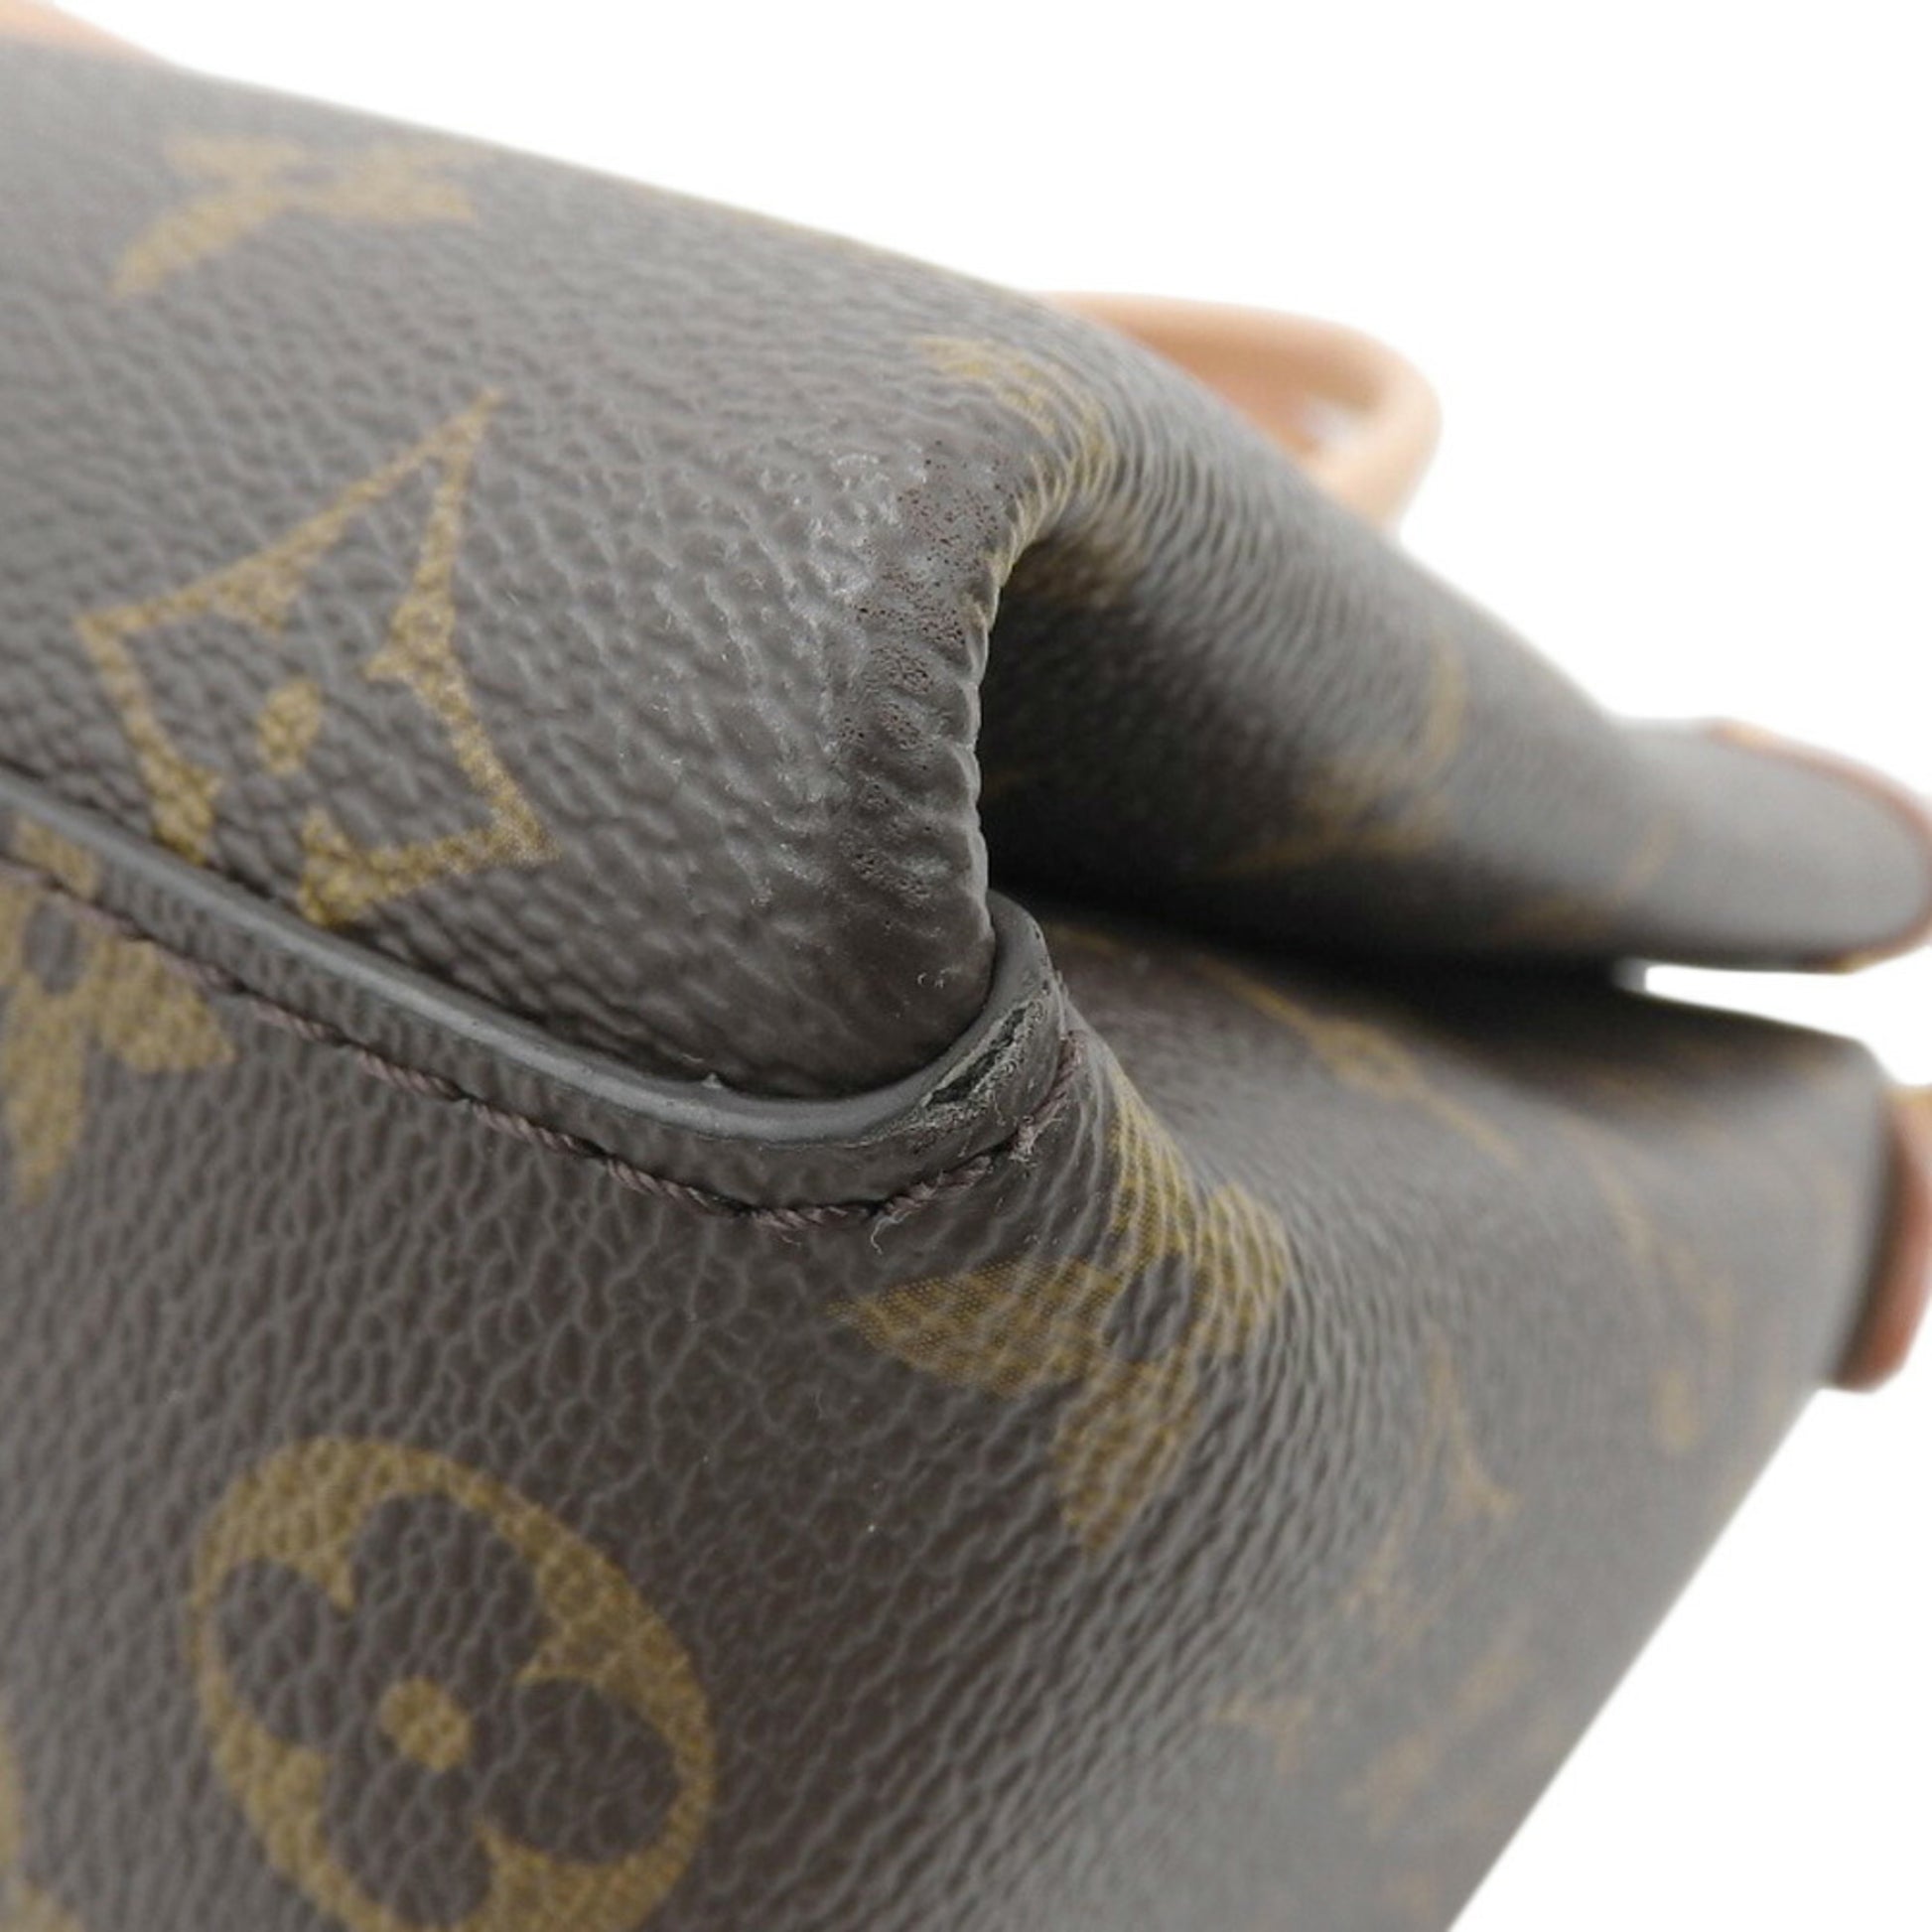 Louis Vuitton Monogram Sufro MM 2WAY Bag Handbag M44816